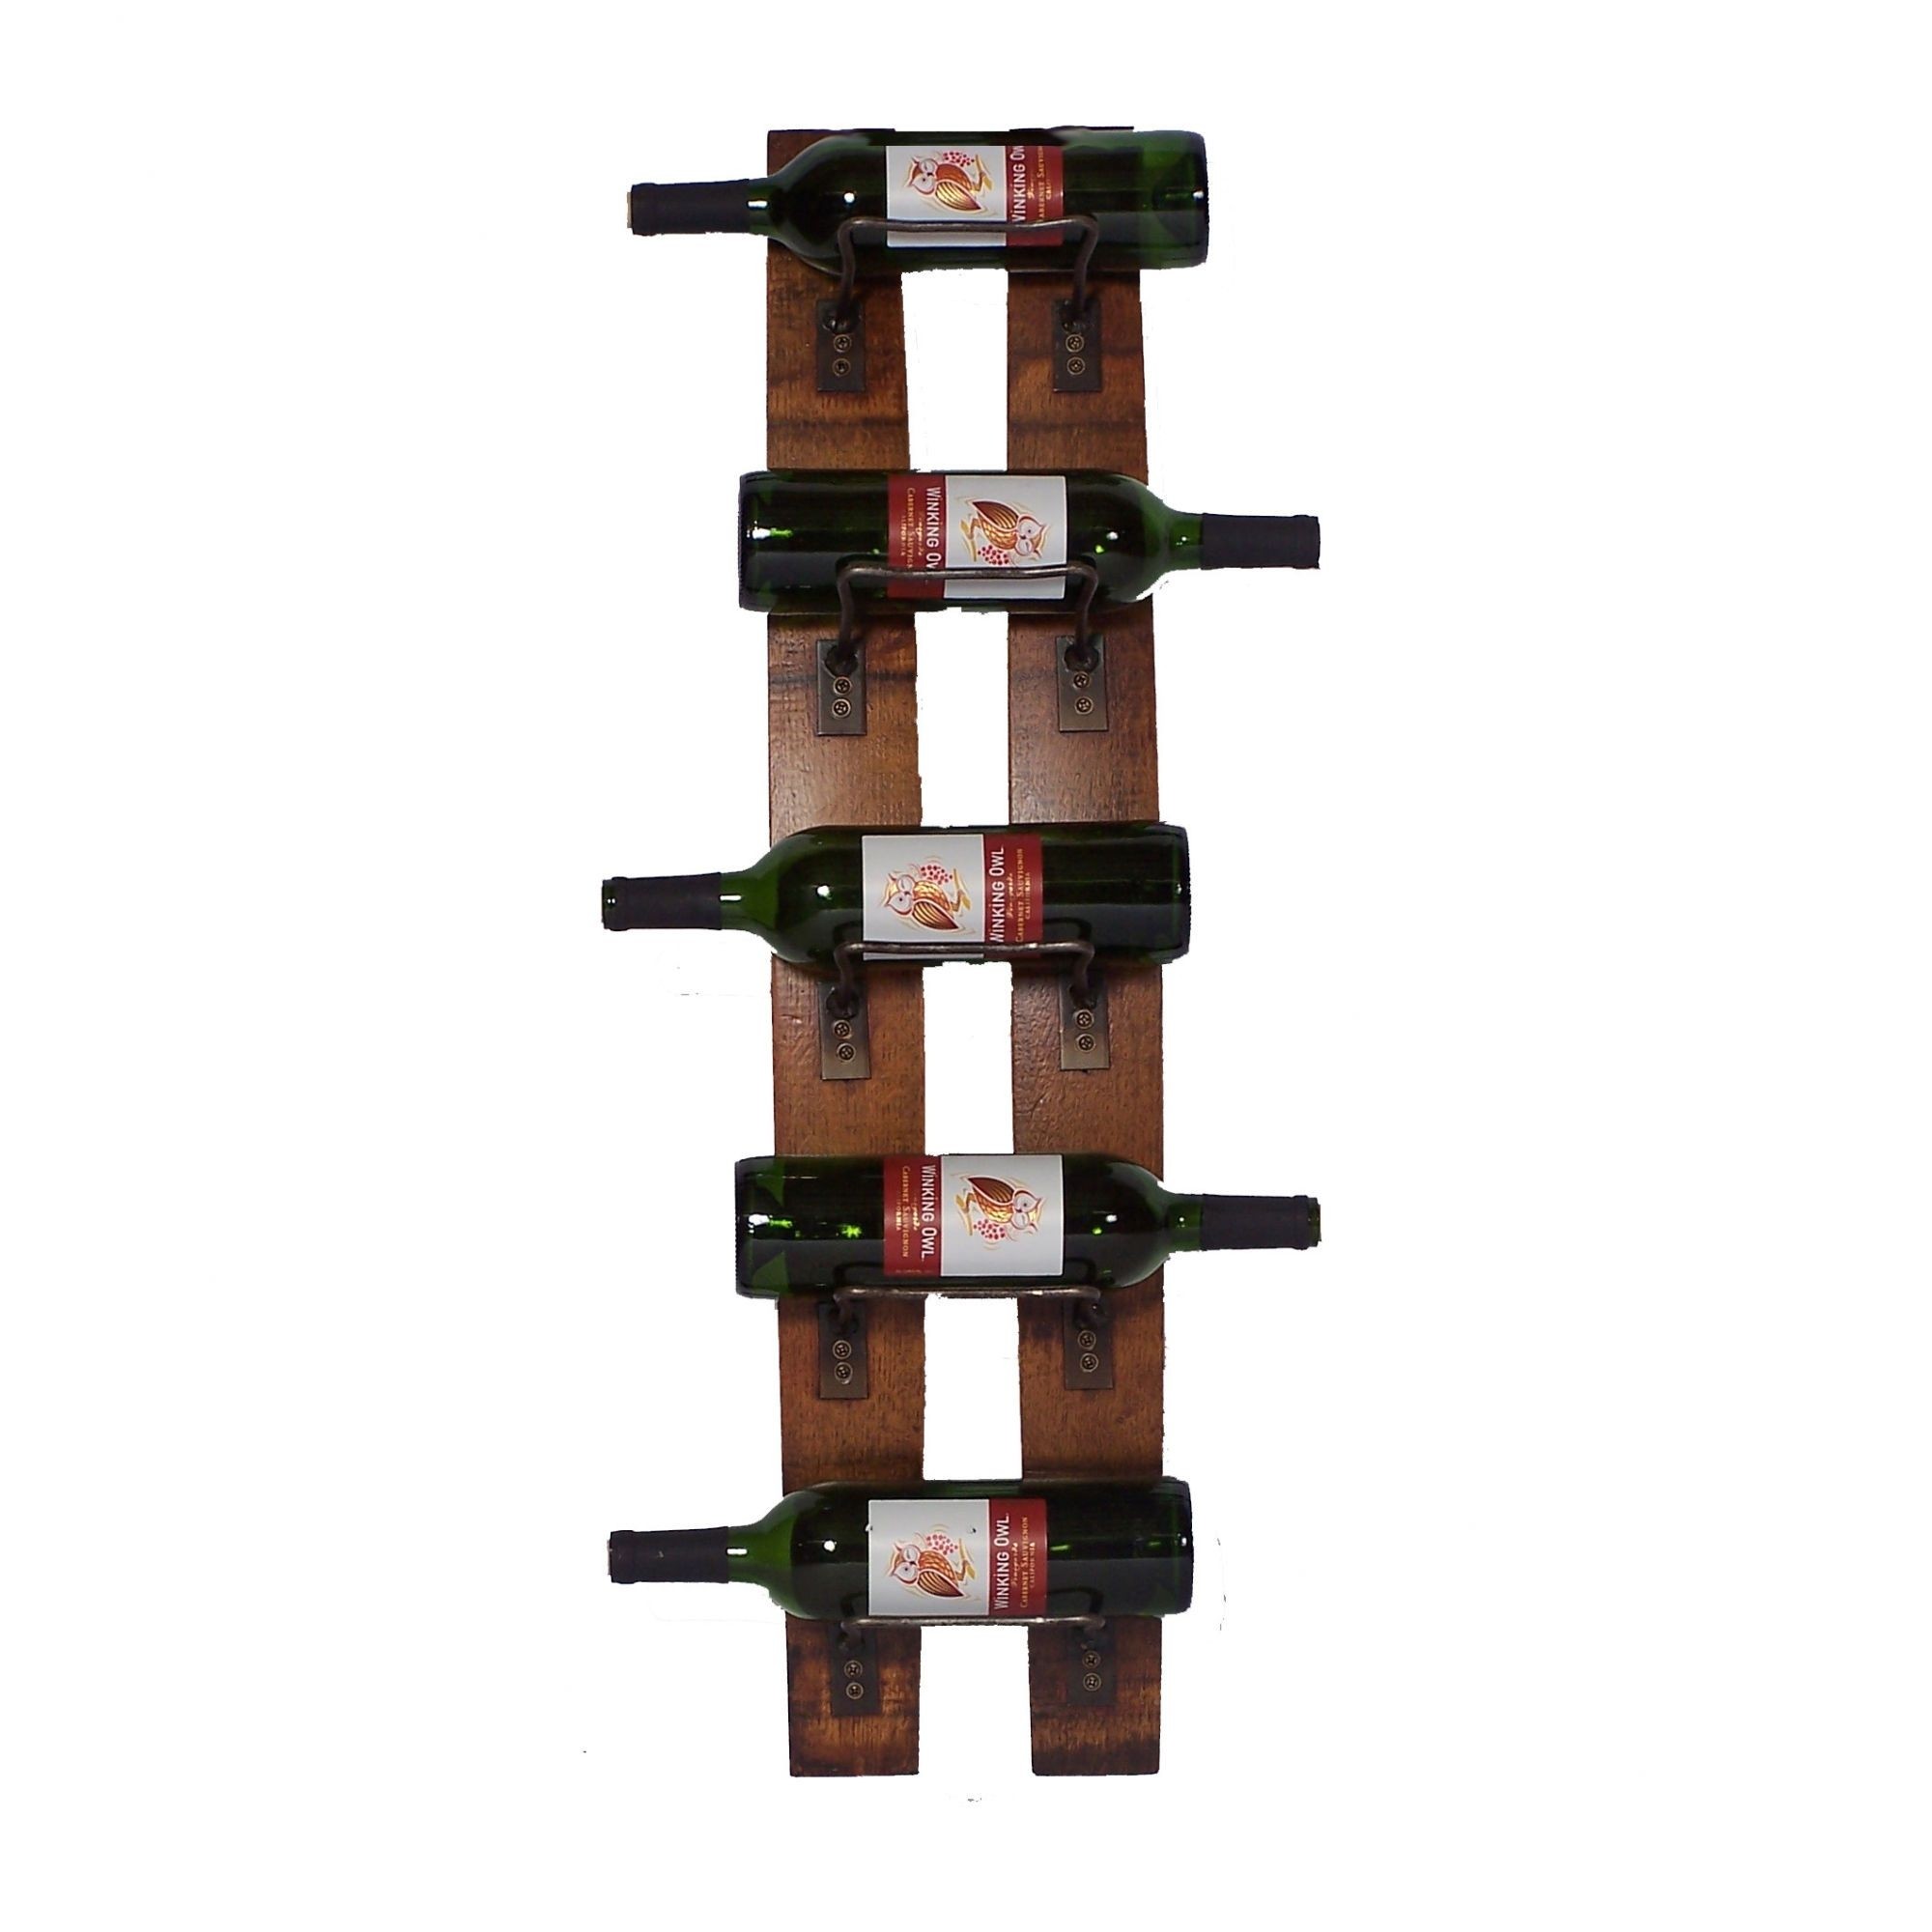 Rustic Hanging Wine Rack